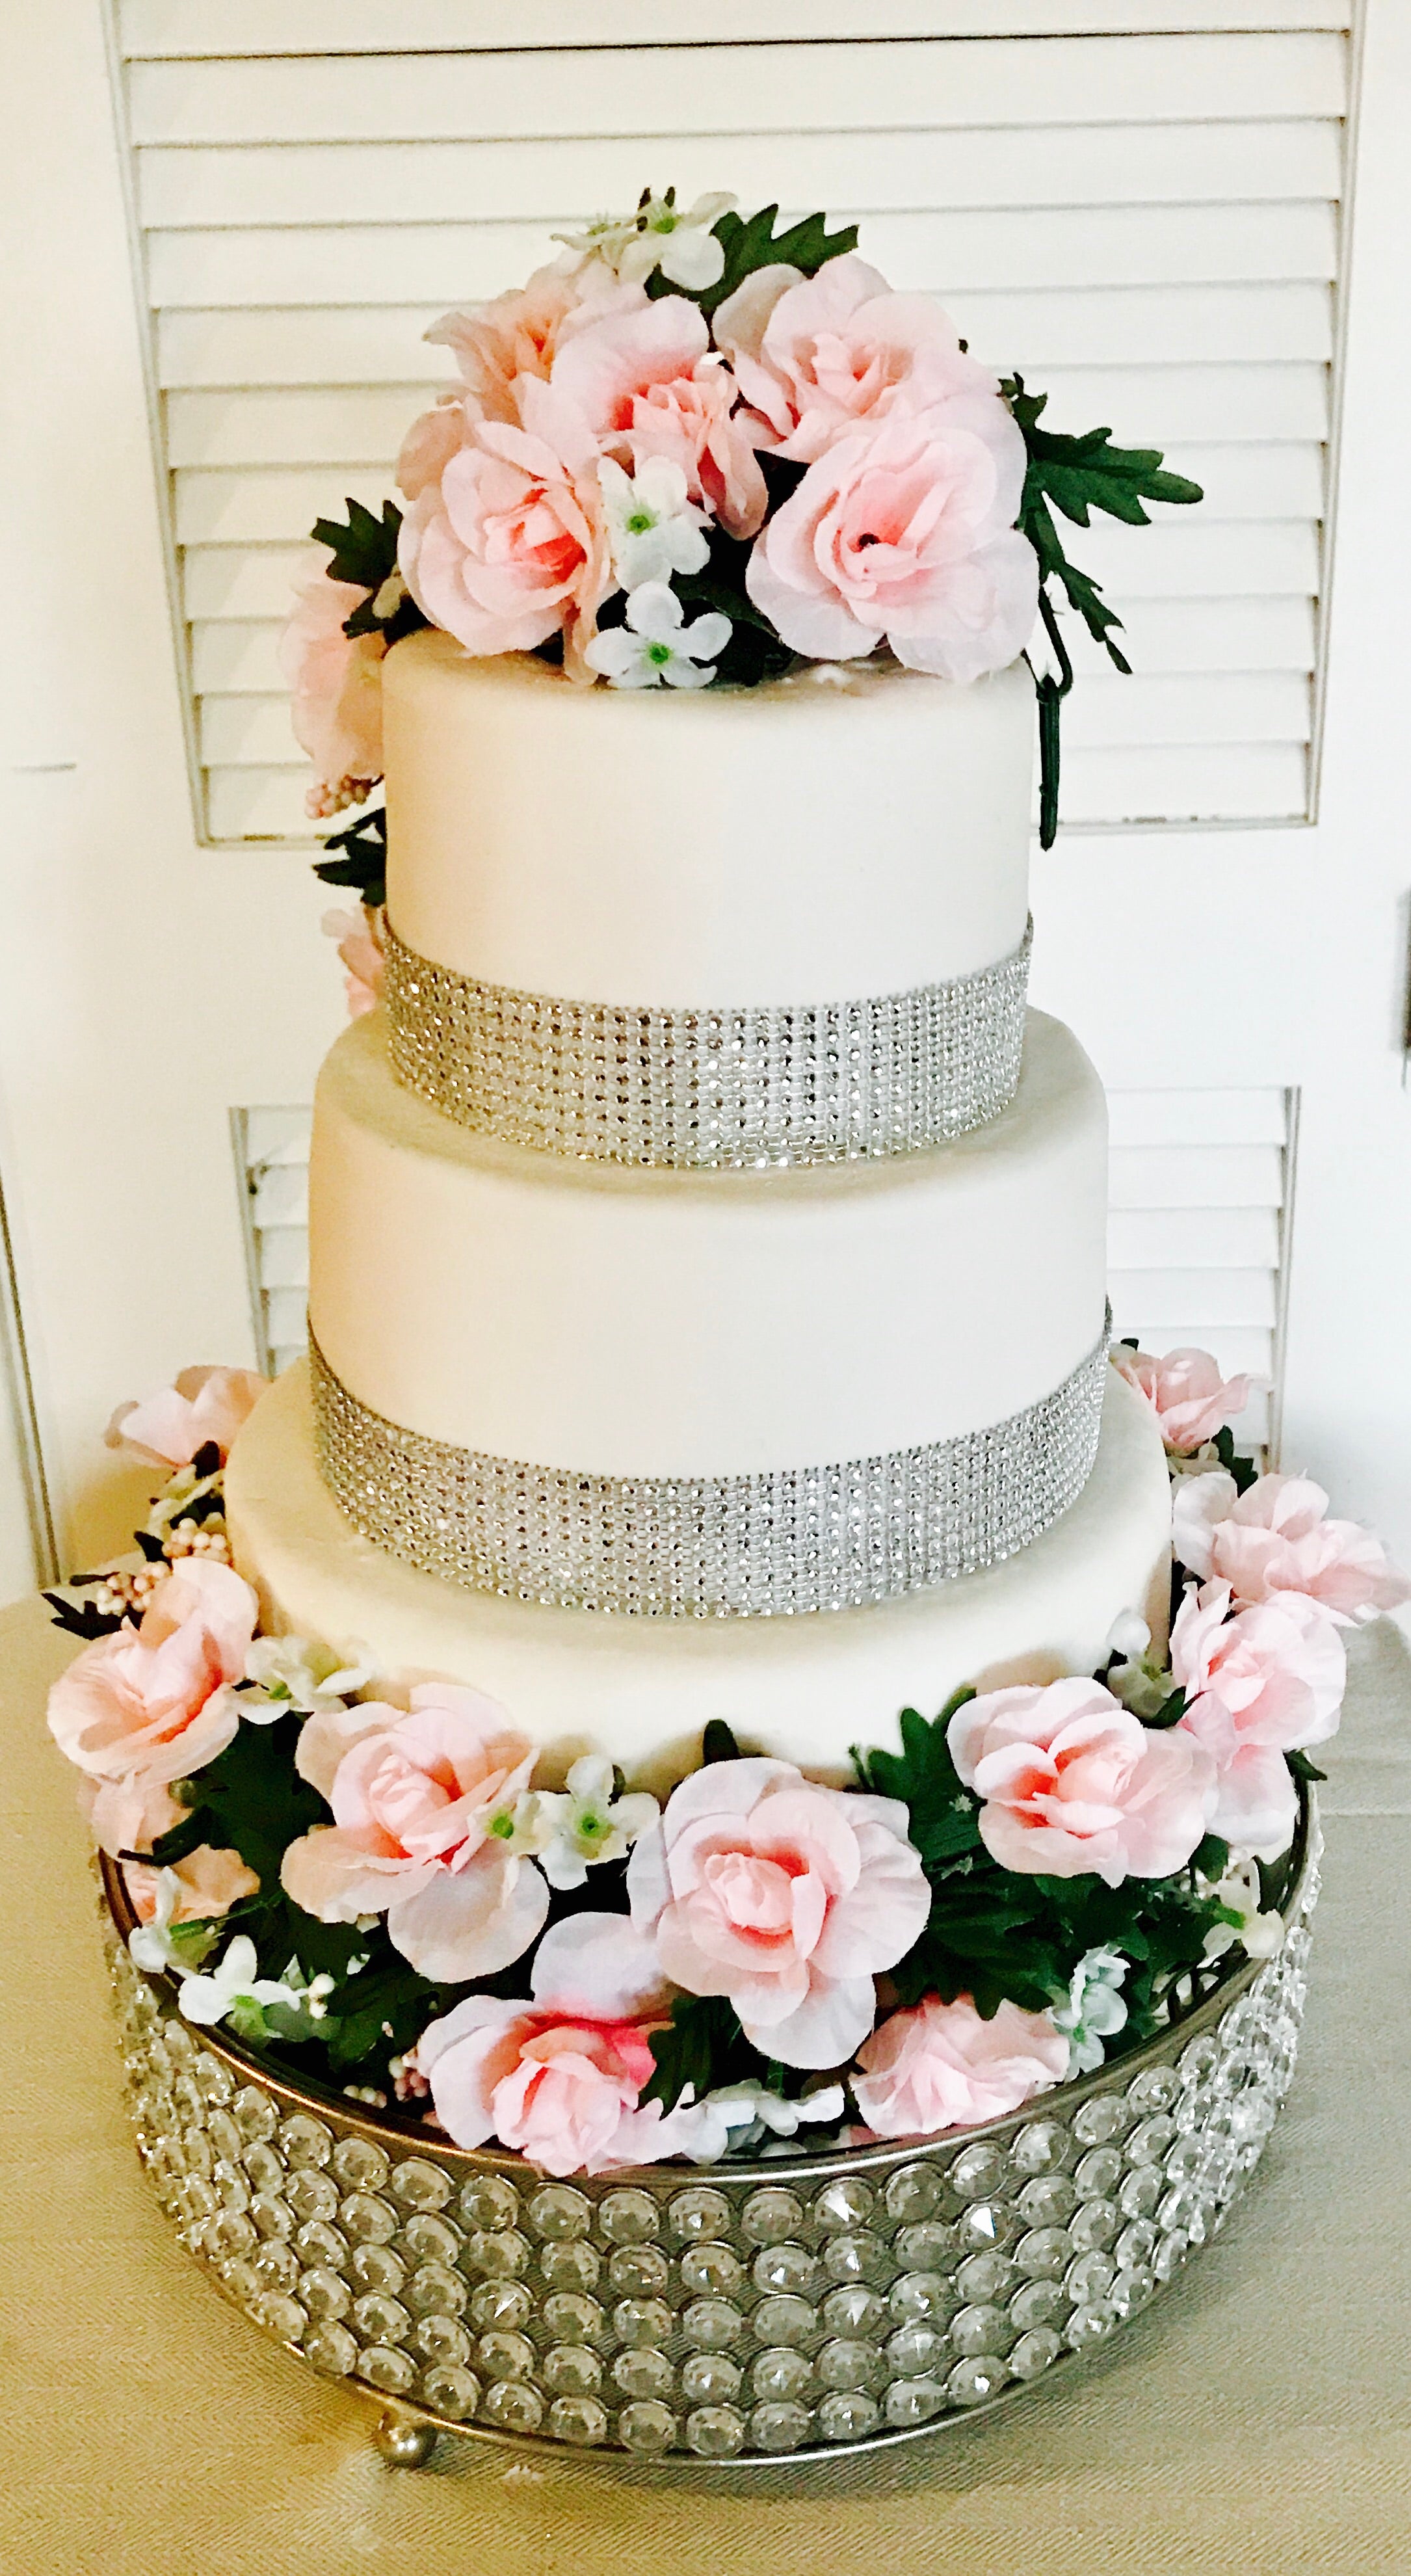 WEDDING CAKE RHINESTONES & FLOWERS